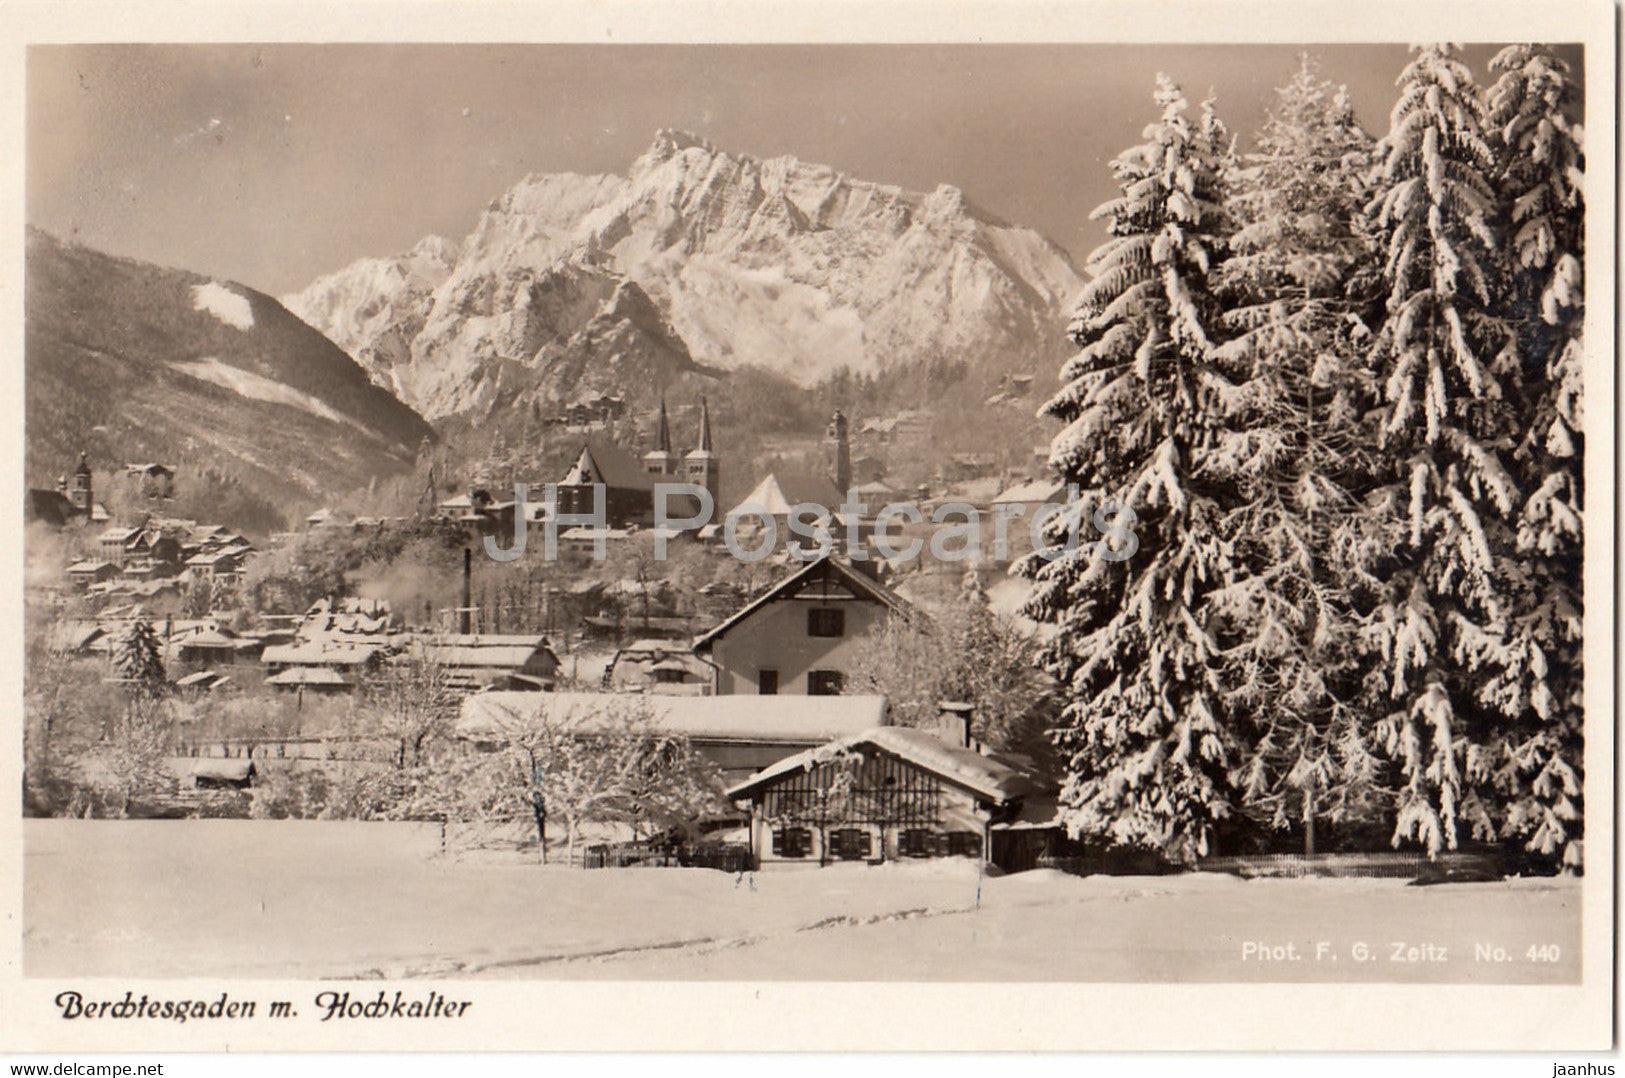 Berchtesgaden m Hochkalter - old postcard - Germany - unused - JH Postcards